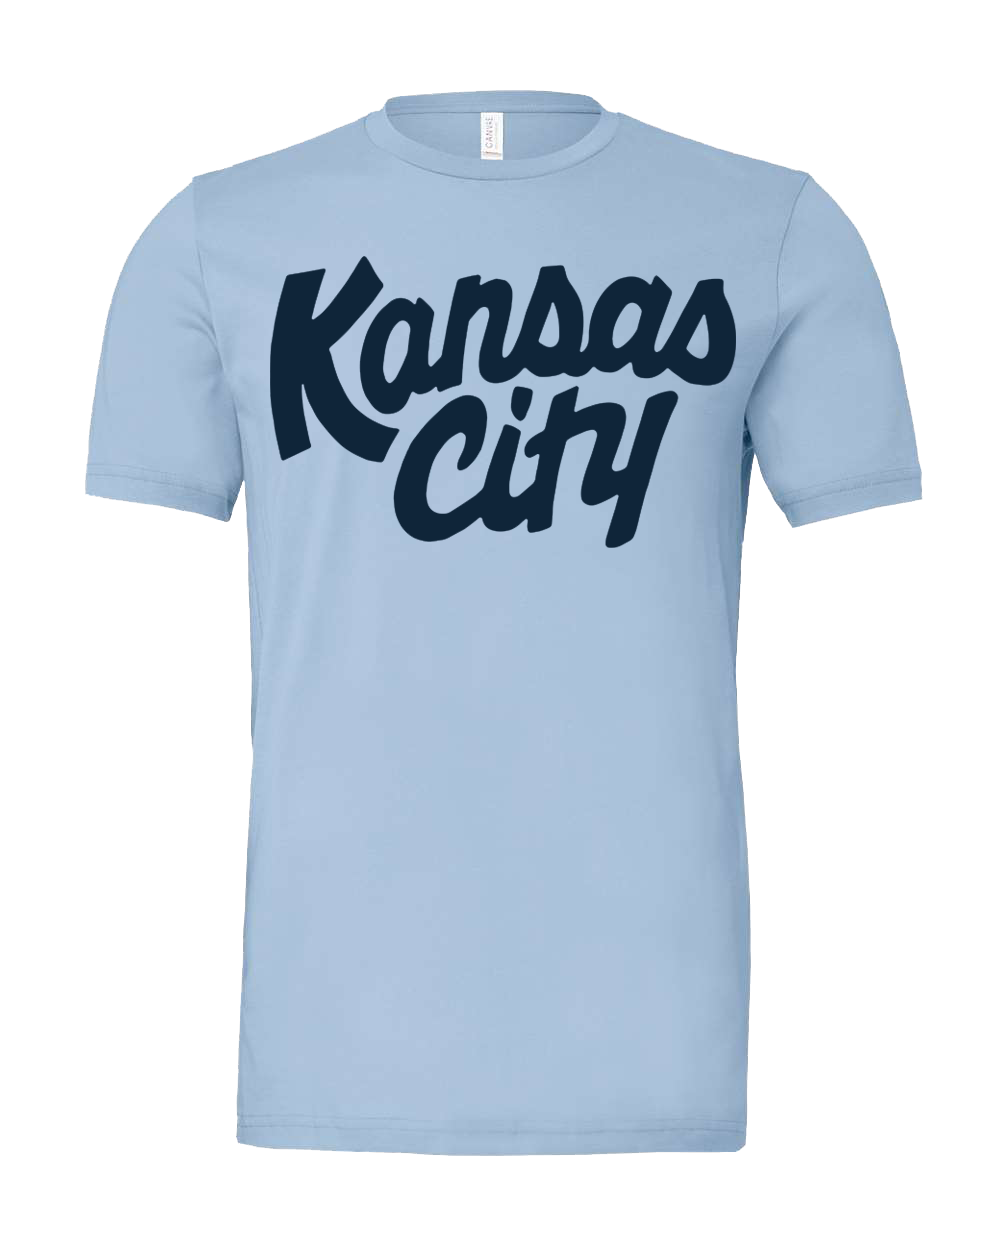 Kansas City Script Tee - Blue - Carly ...